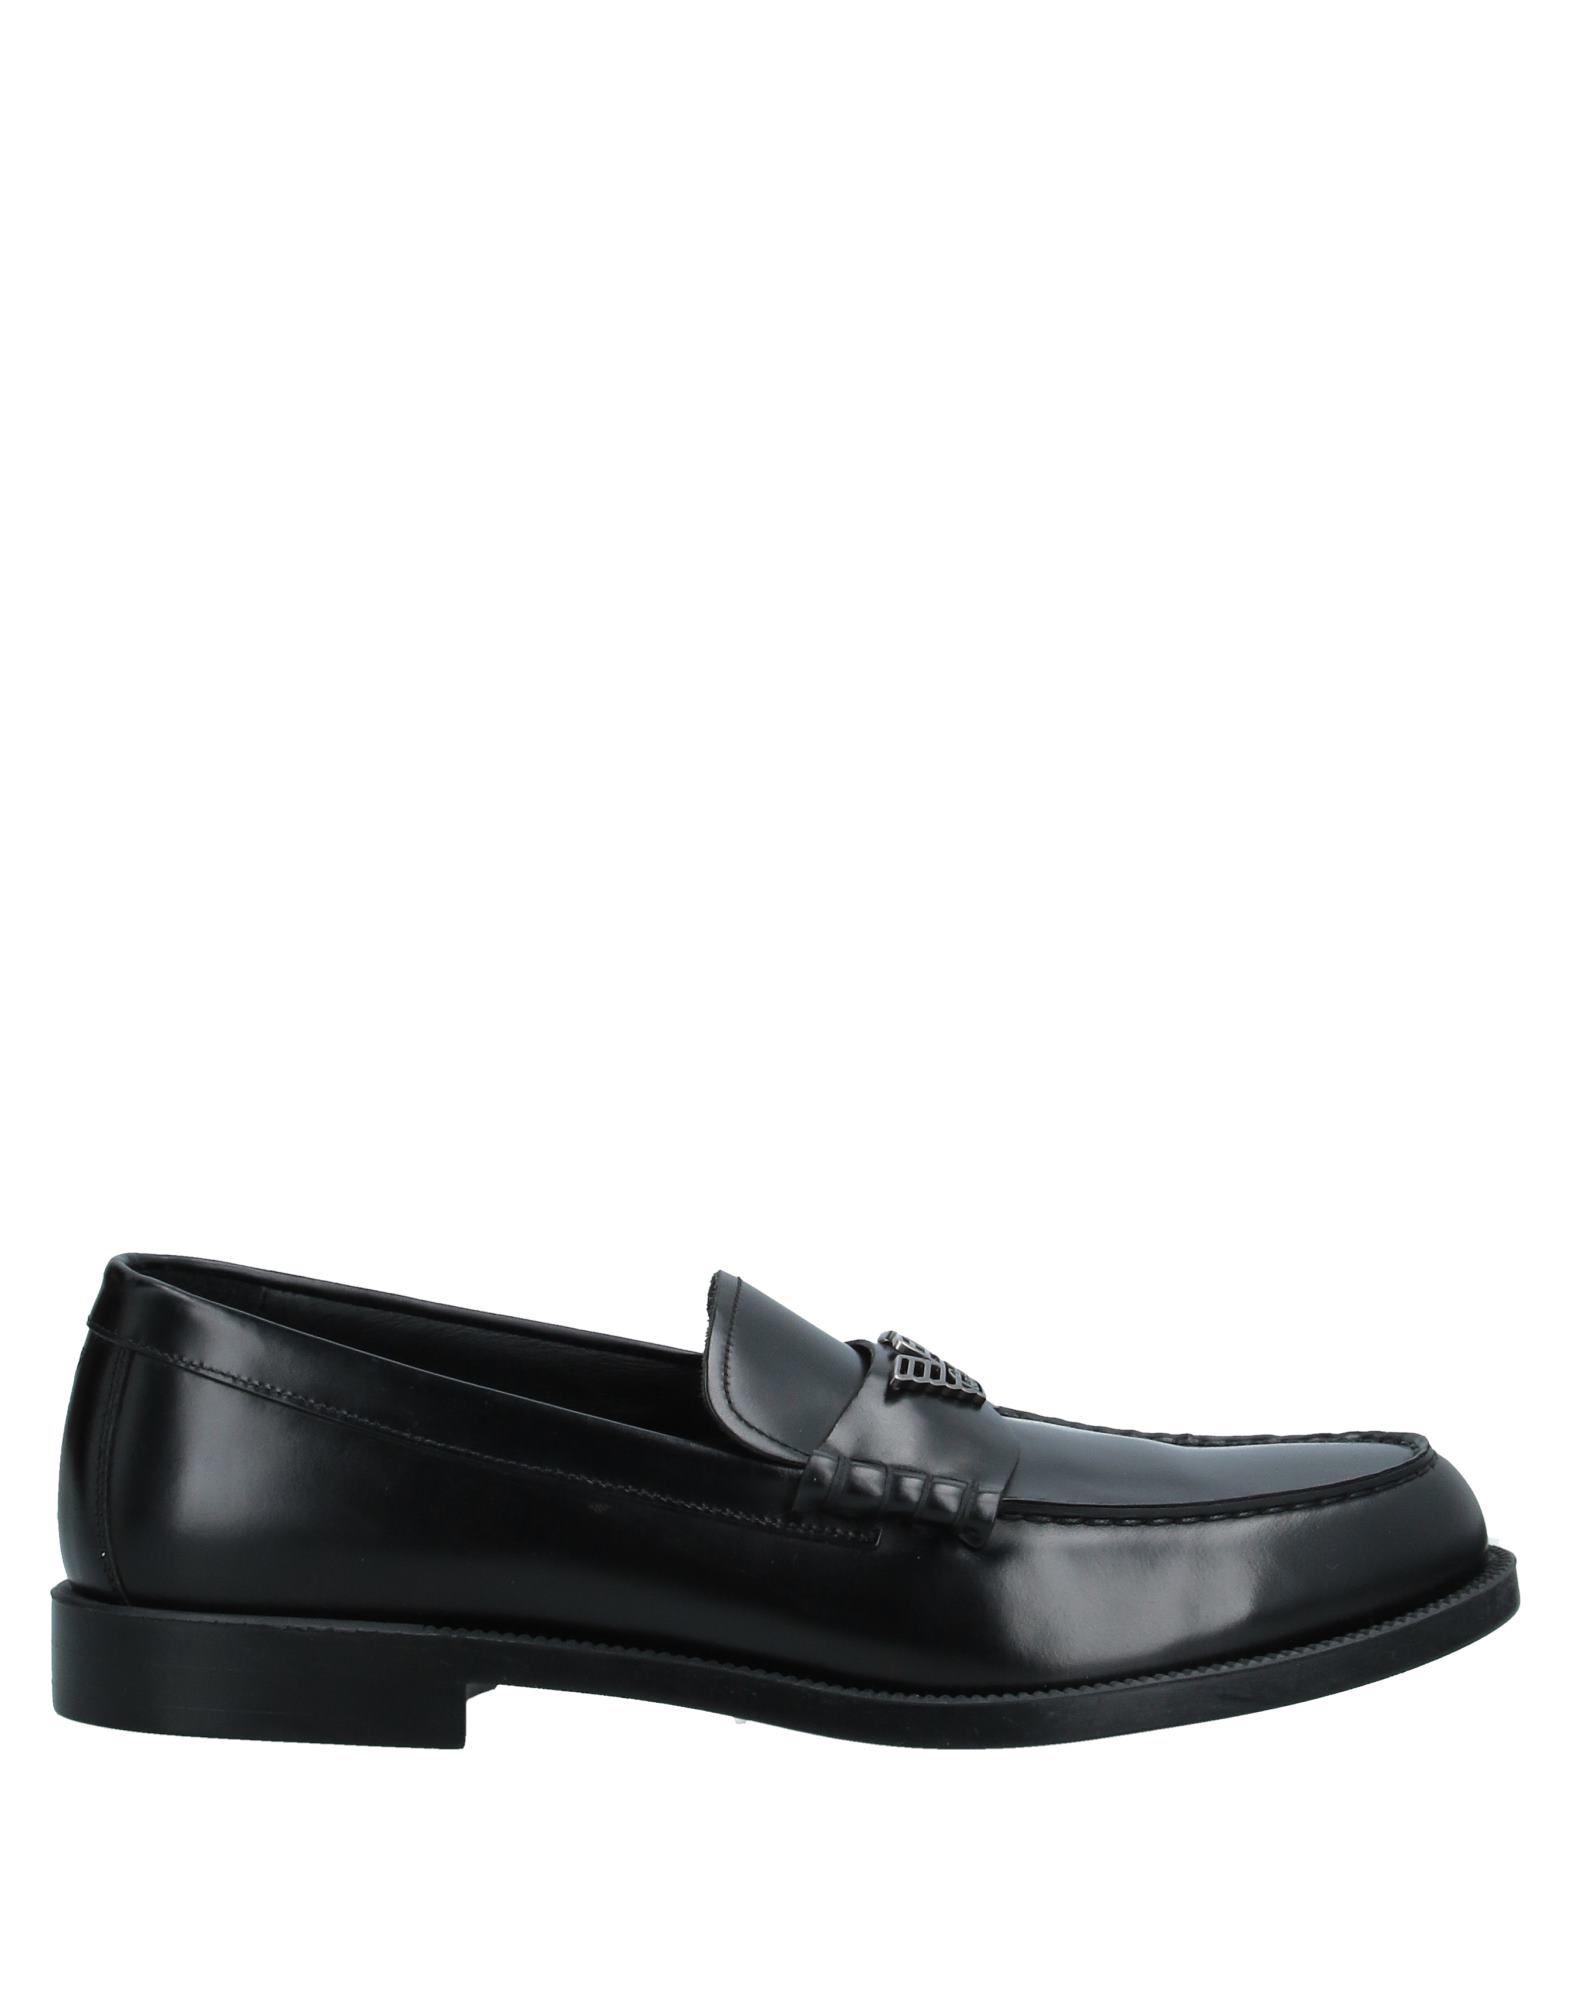 Emporio Armani Loafer in Black for Men - Lyst